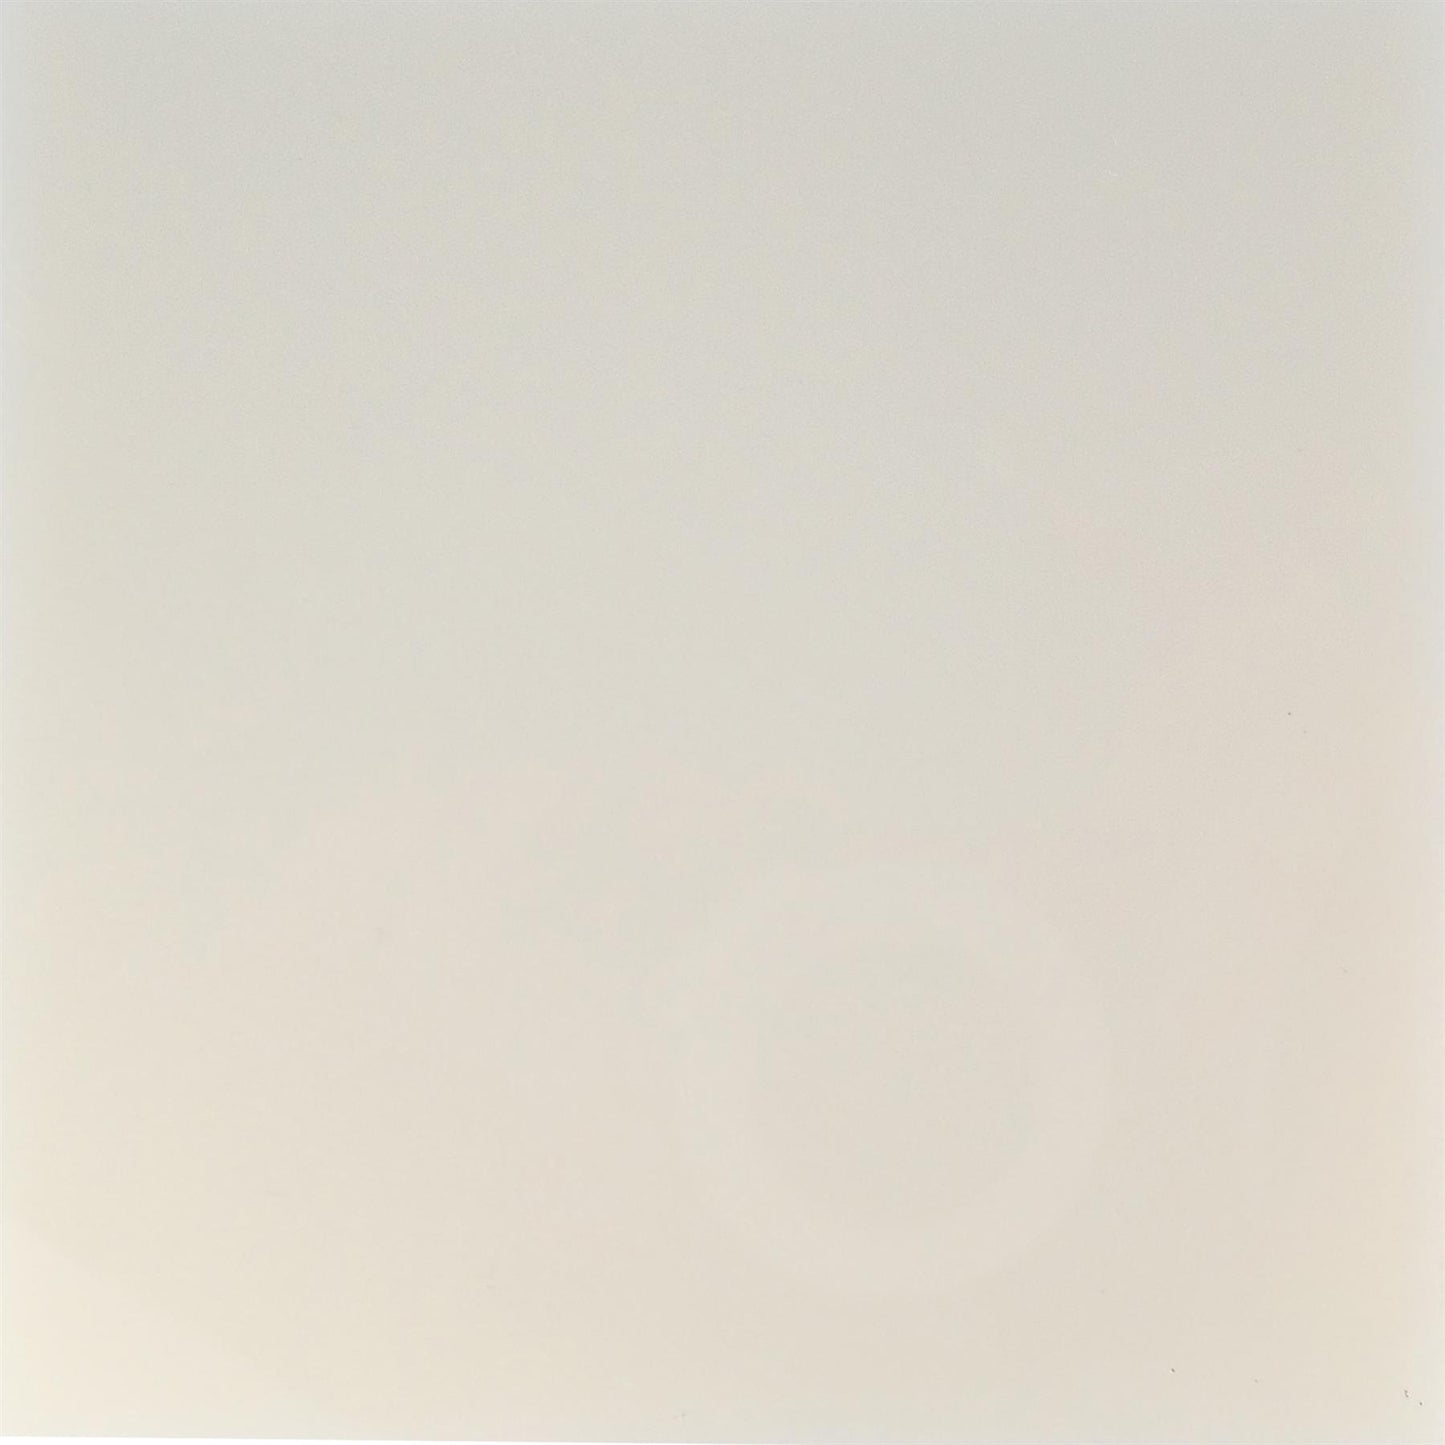 [Incudo] Cream Pearlescent Acrylic Sheet - 1000x600x3mm